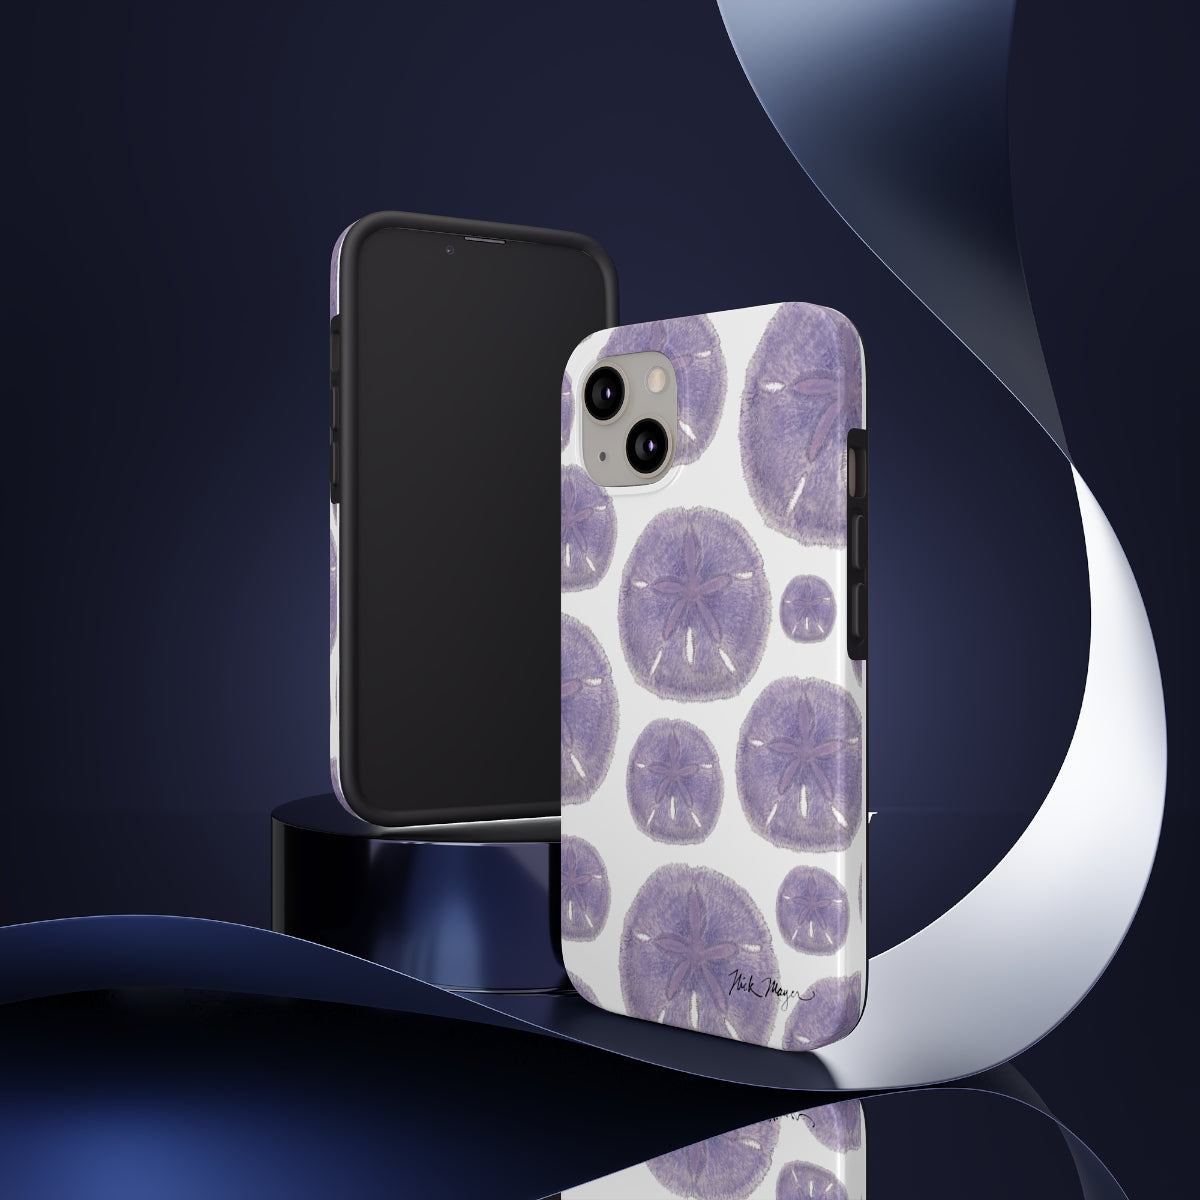 Purple Sand Dollars Phone Case (iPhone)